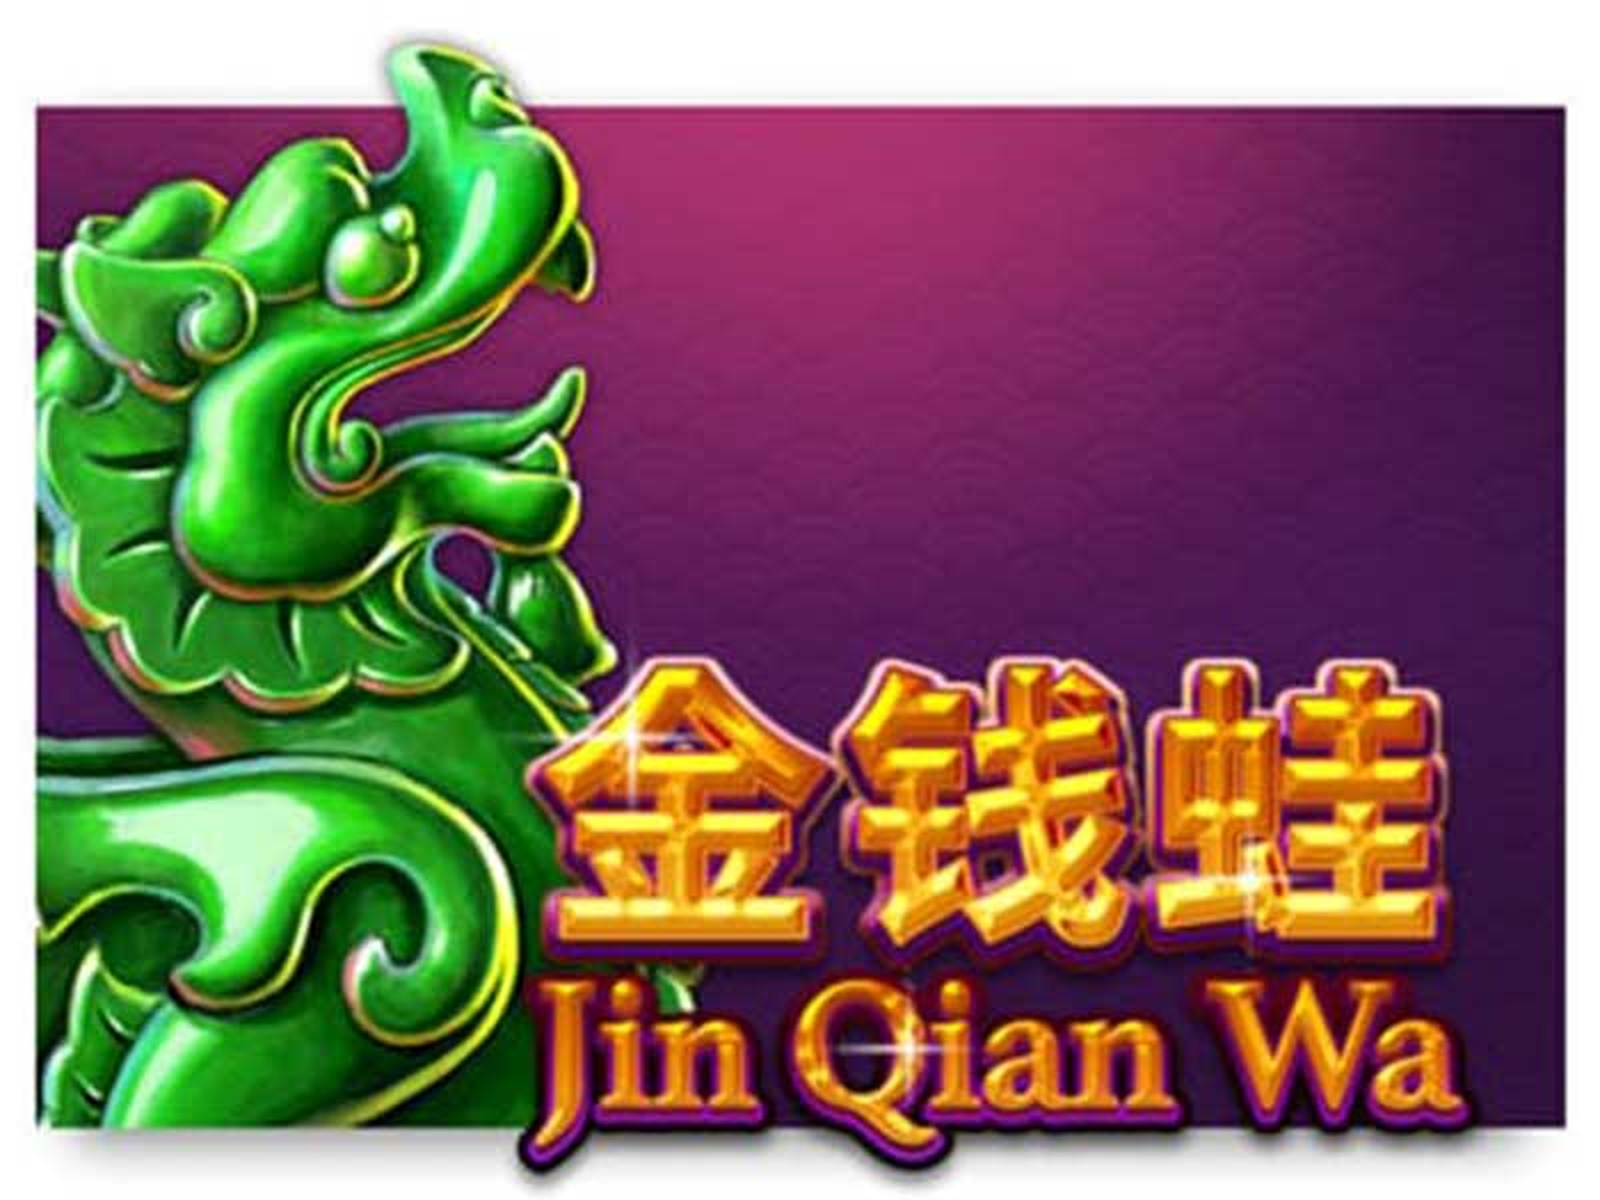 The Jin Qian Wa Online Slot Demo Game by Playtech